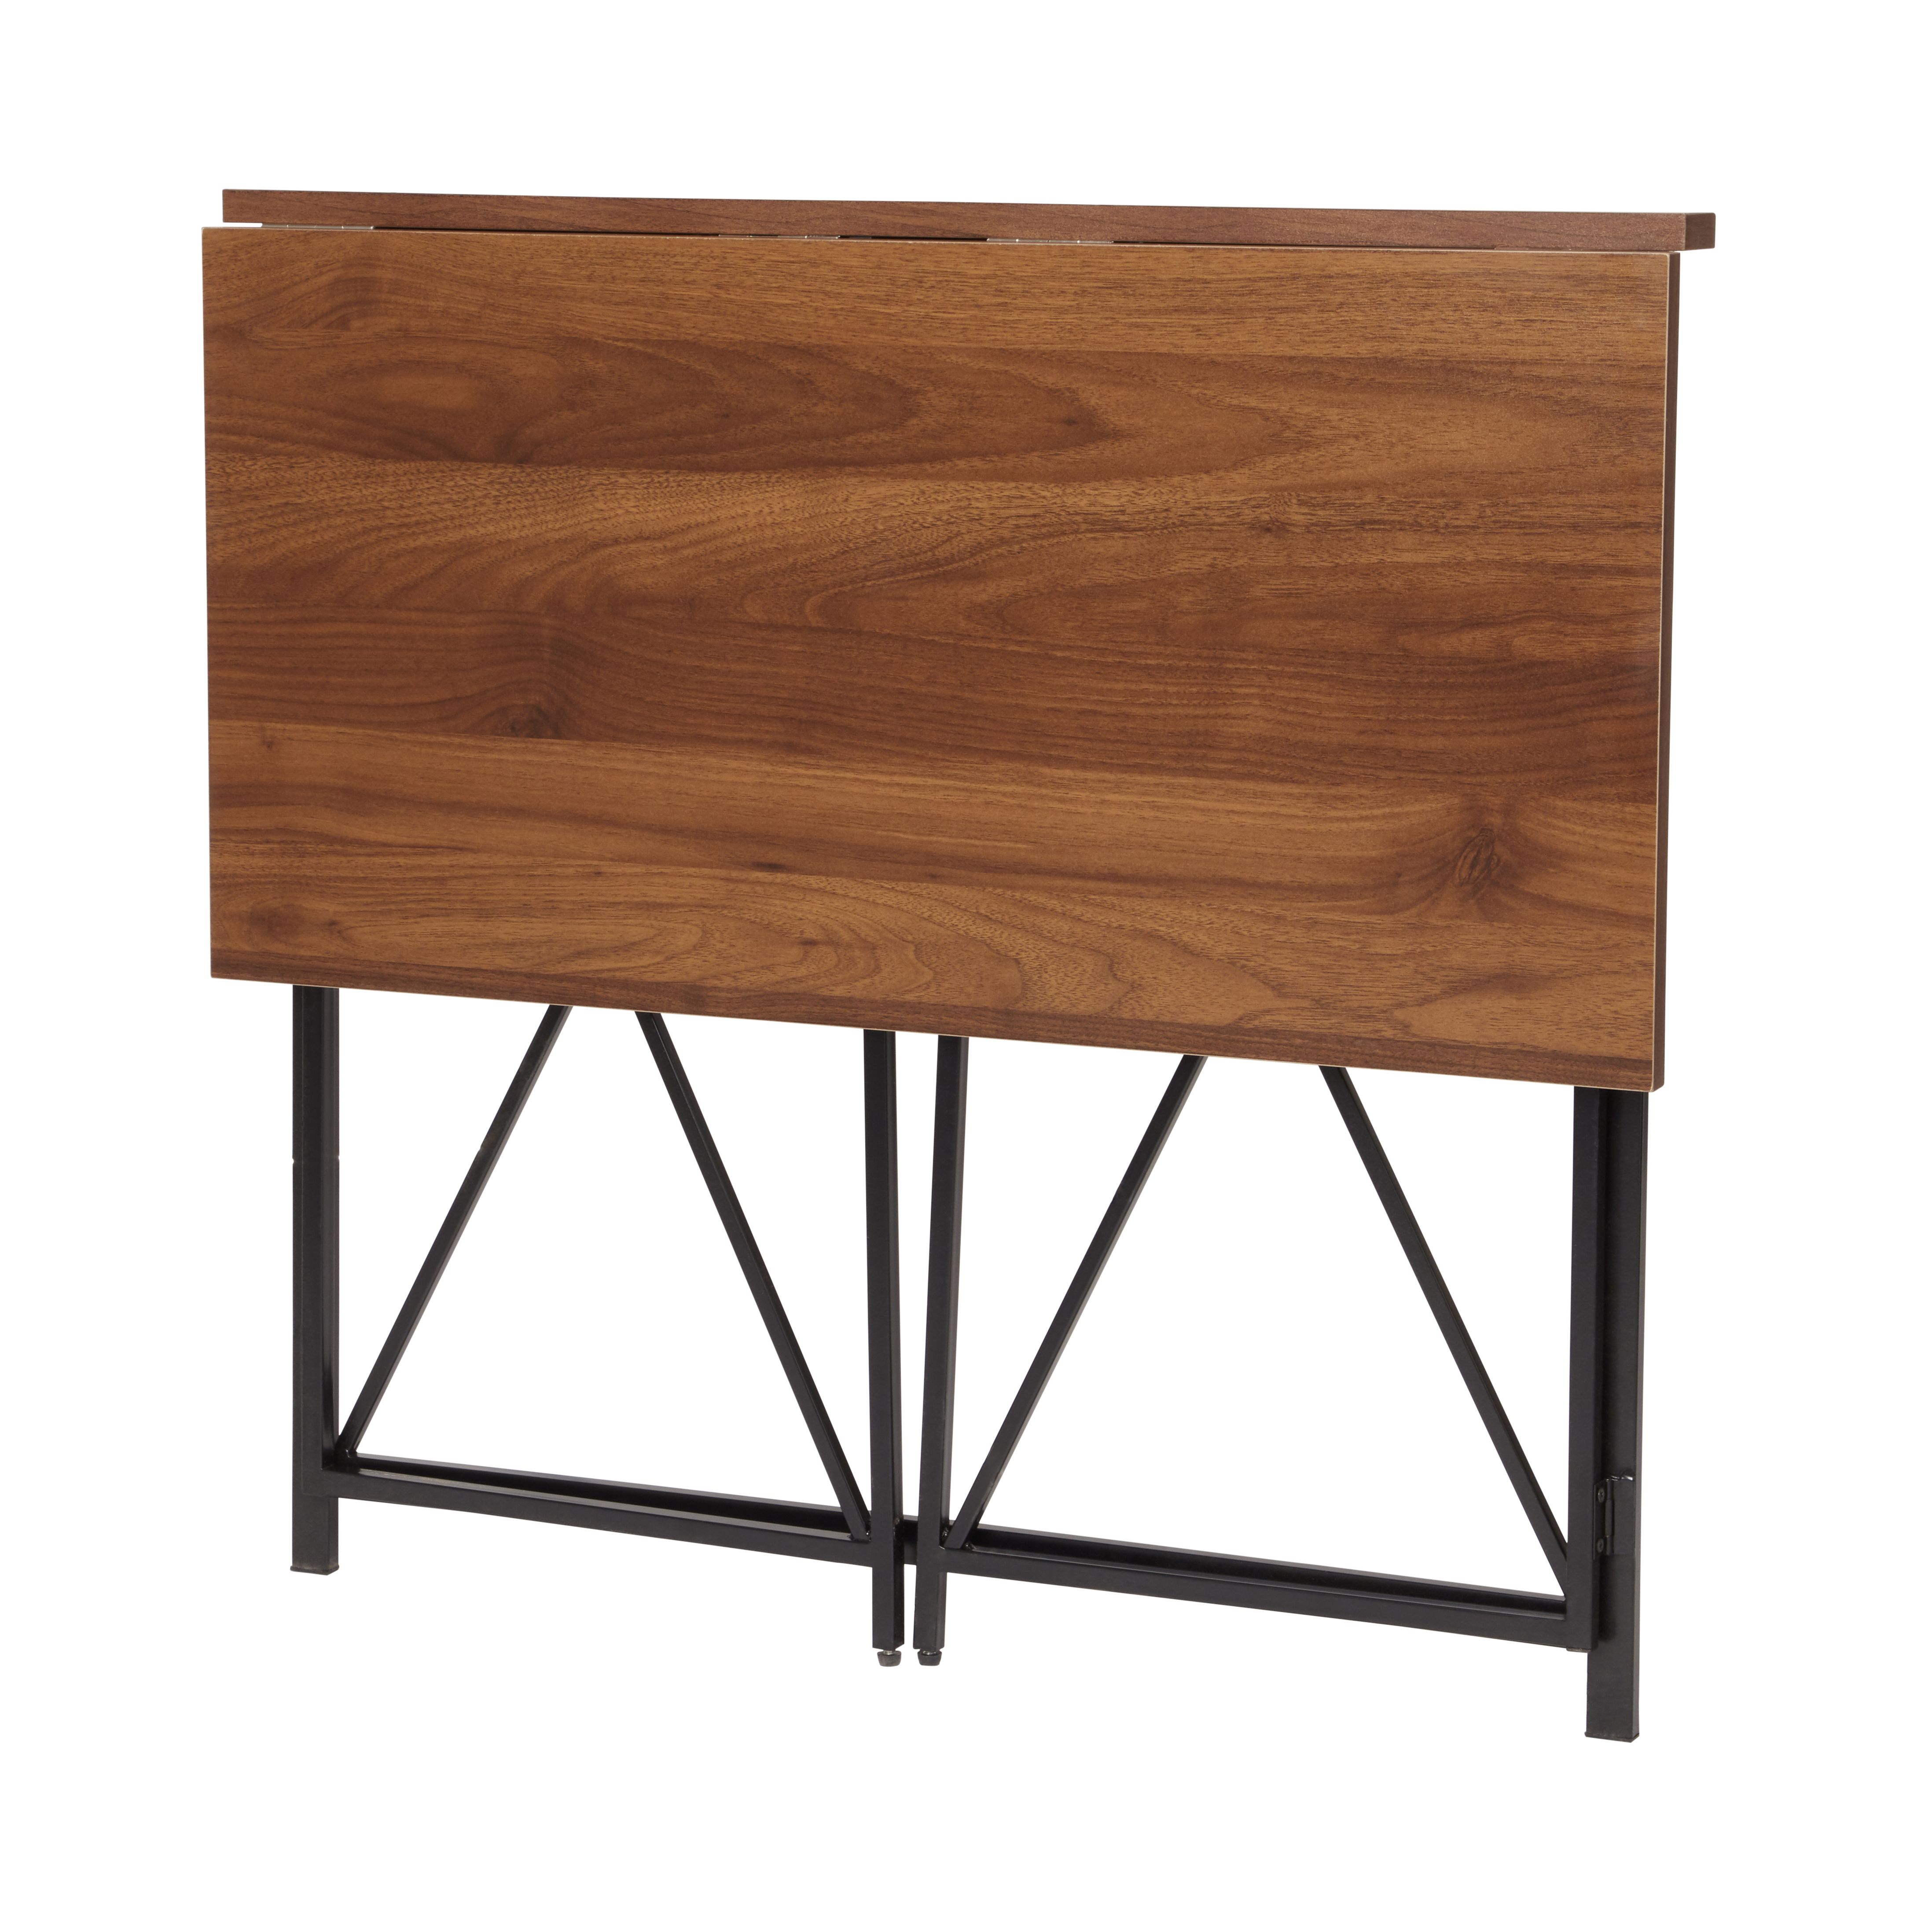 Seponi Ready assembled Matt walnut effect Folding desk (H)750mm (W)800mm (D)450mm